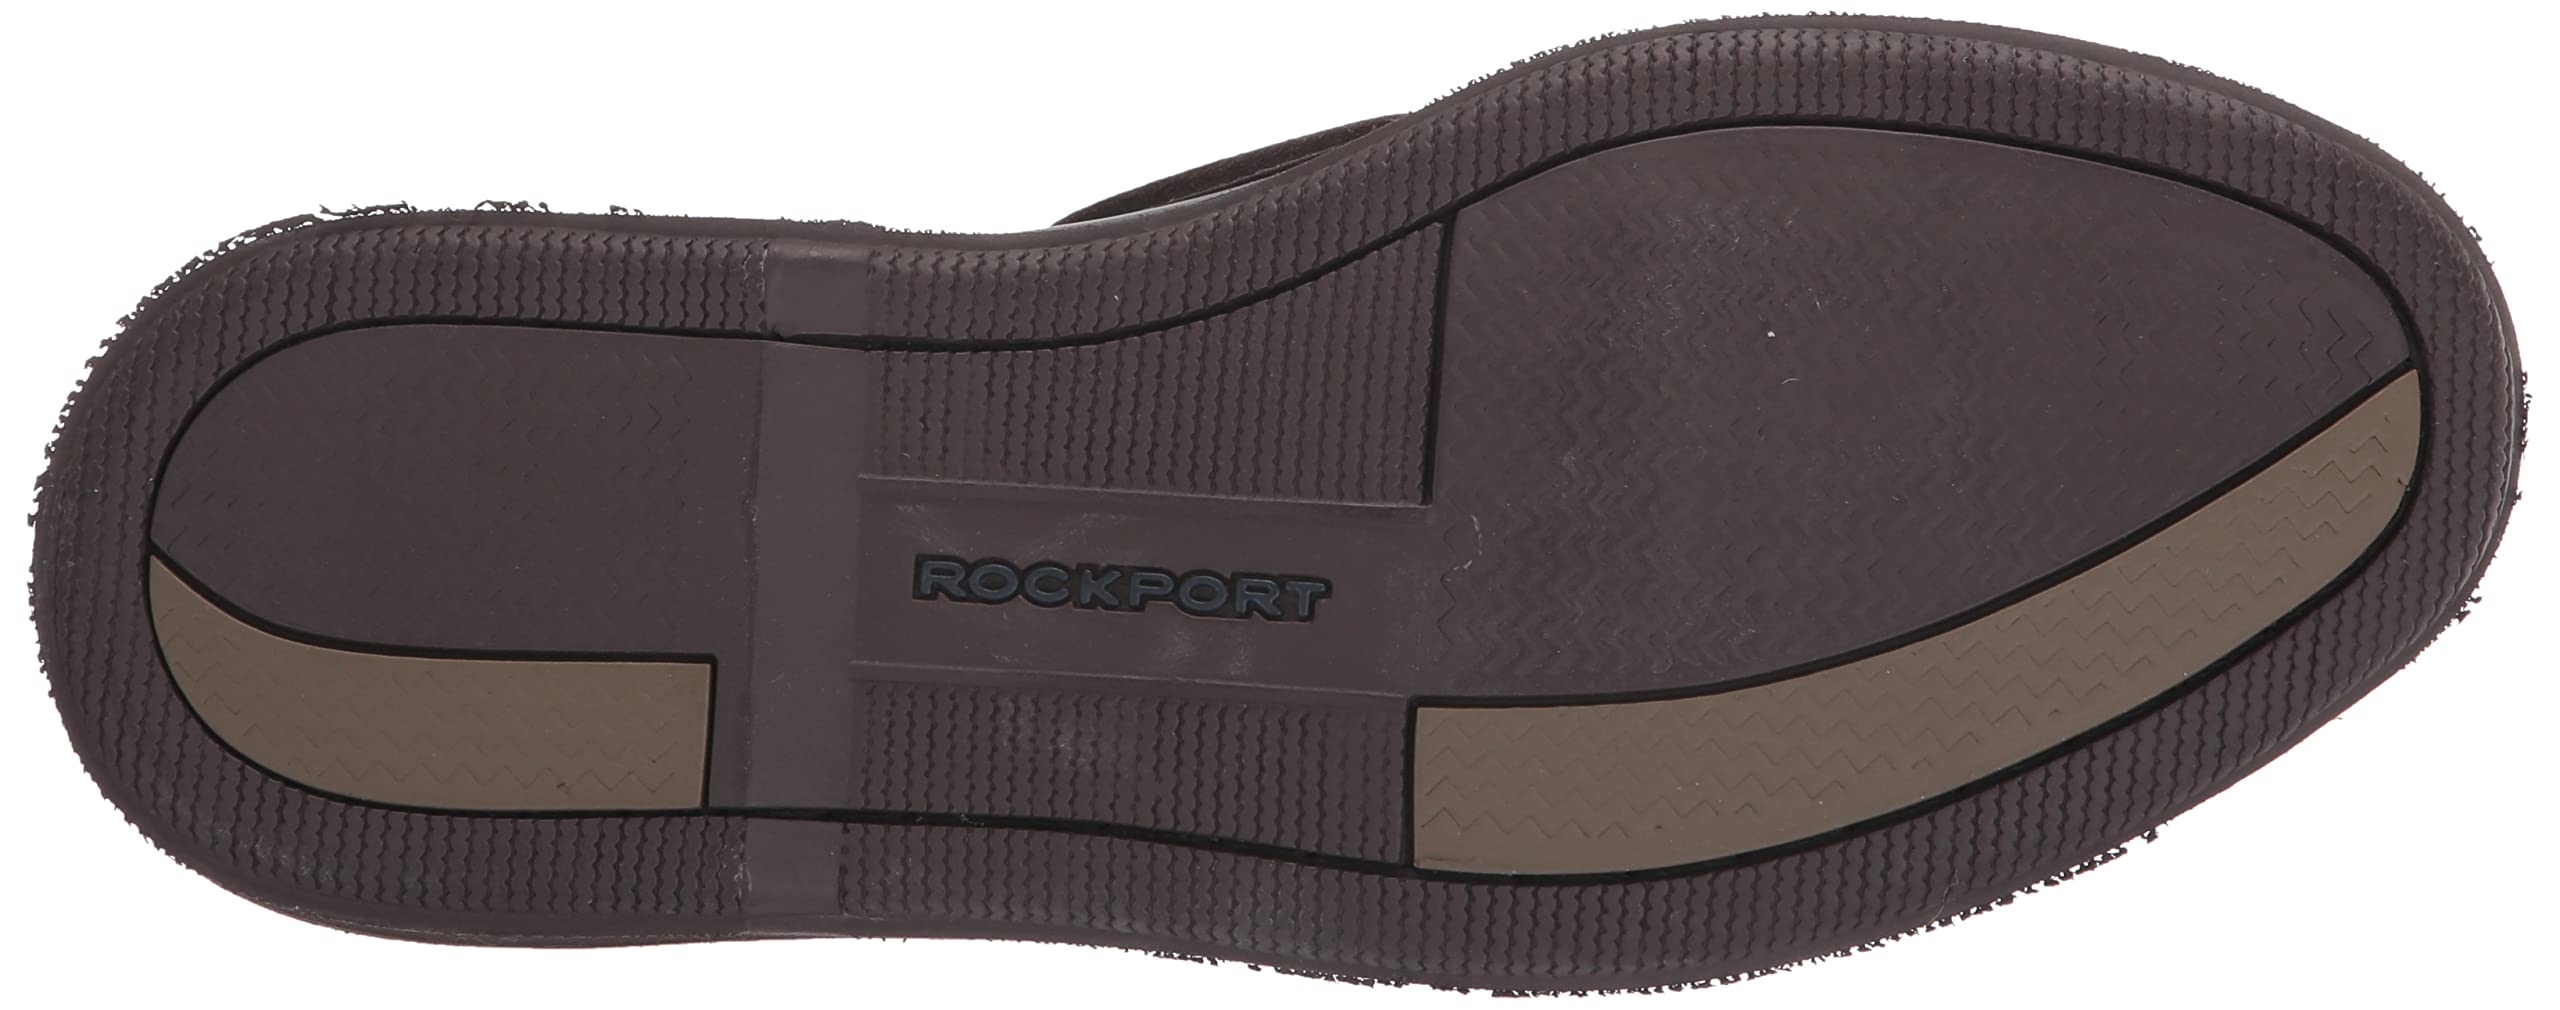 Rockport Men's Perth Boat Shoe